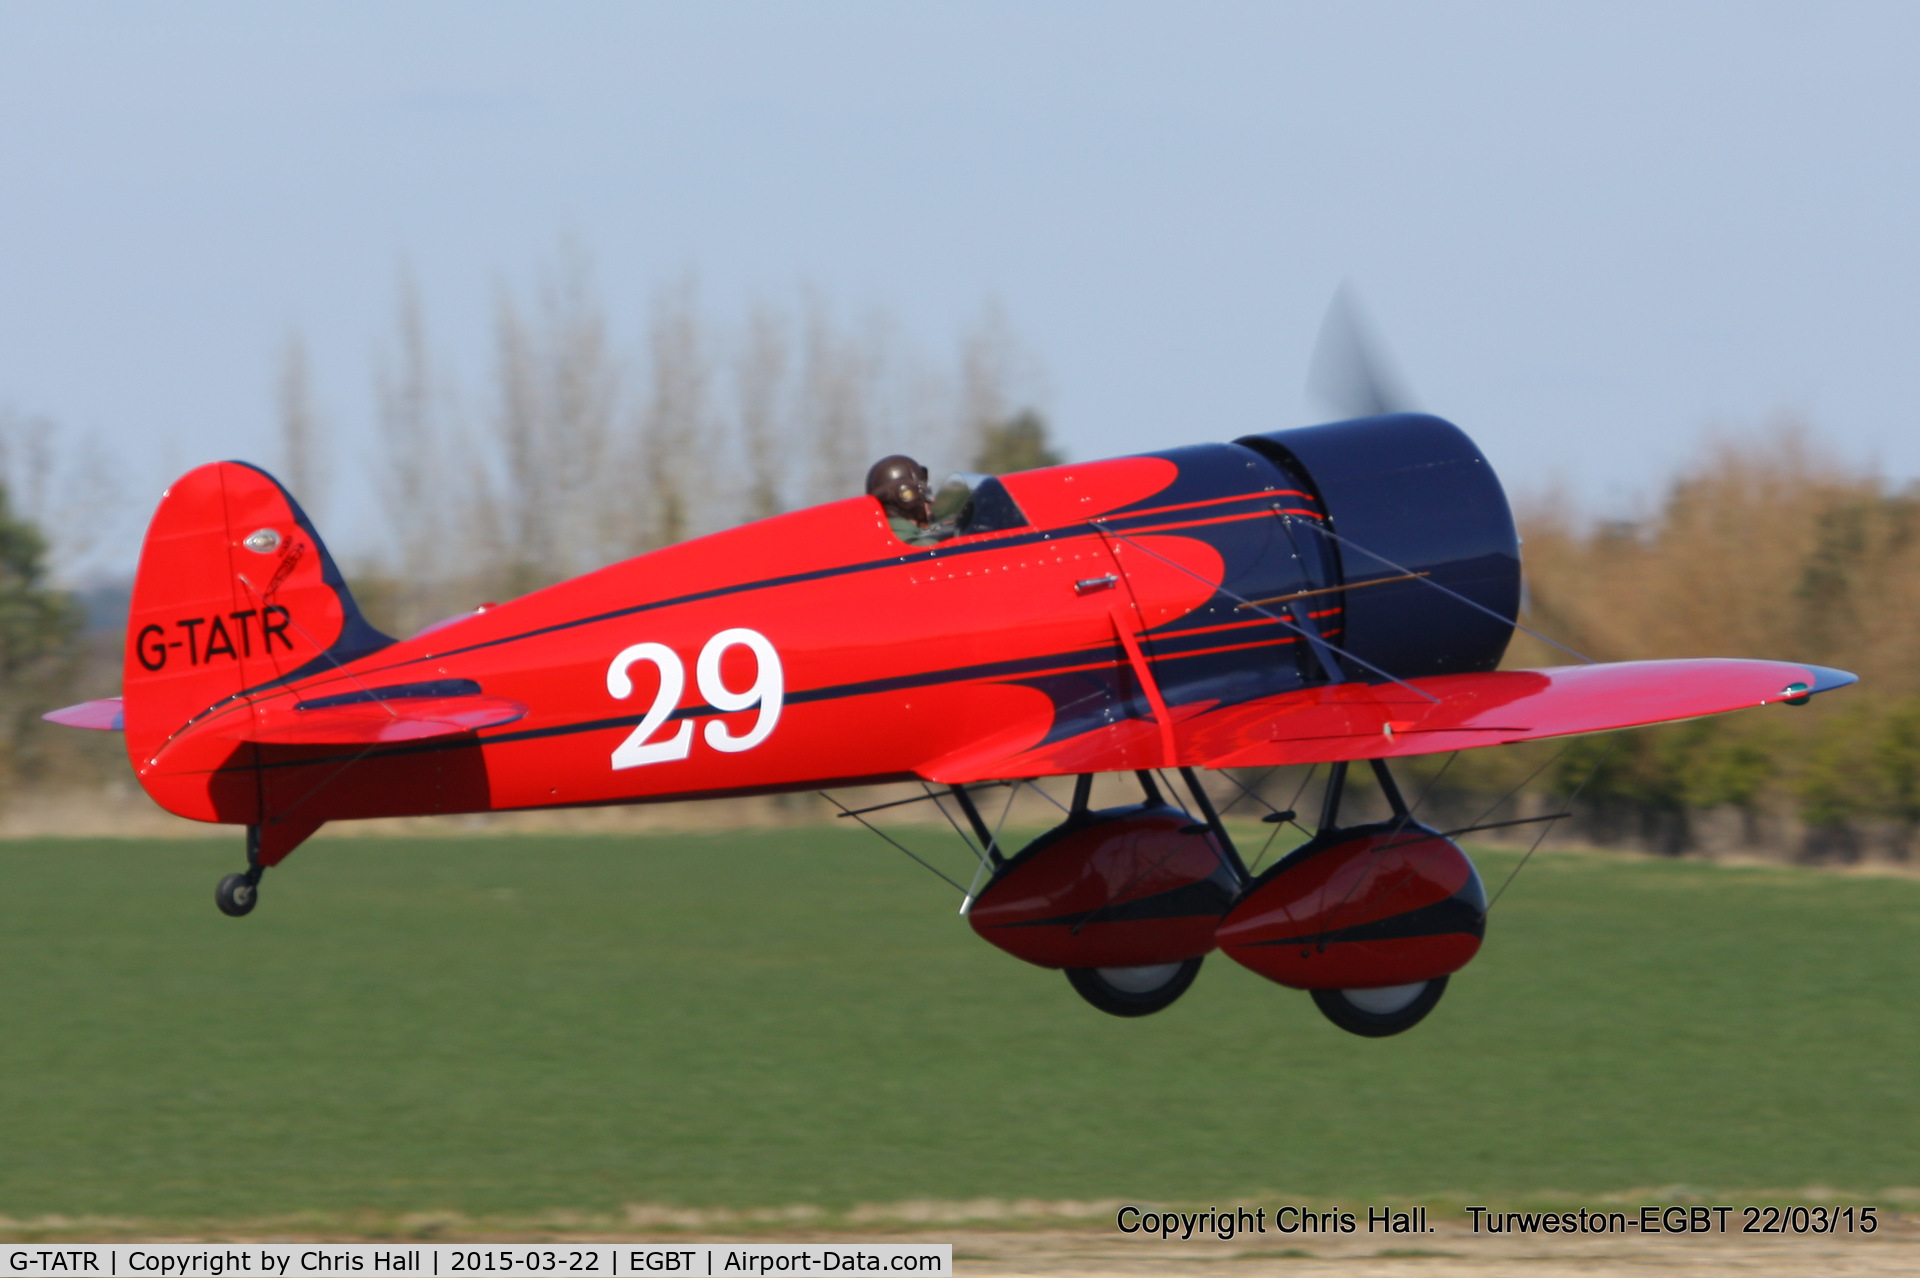 G-TATR, 2012 Travel Air Type R Racer Replica C/N LAA 362-14892, at the Vintage Aircraft Club spring rally